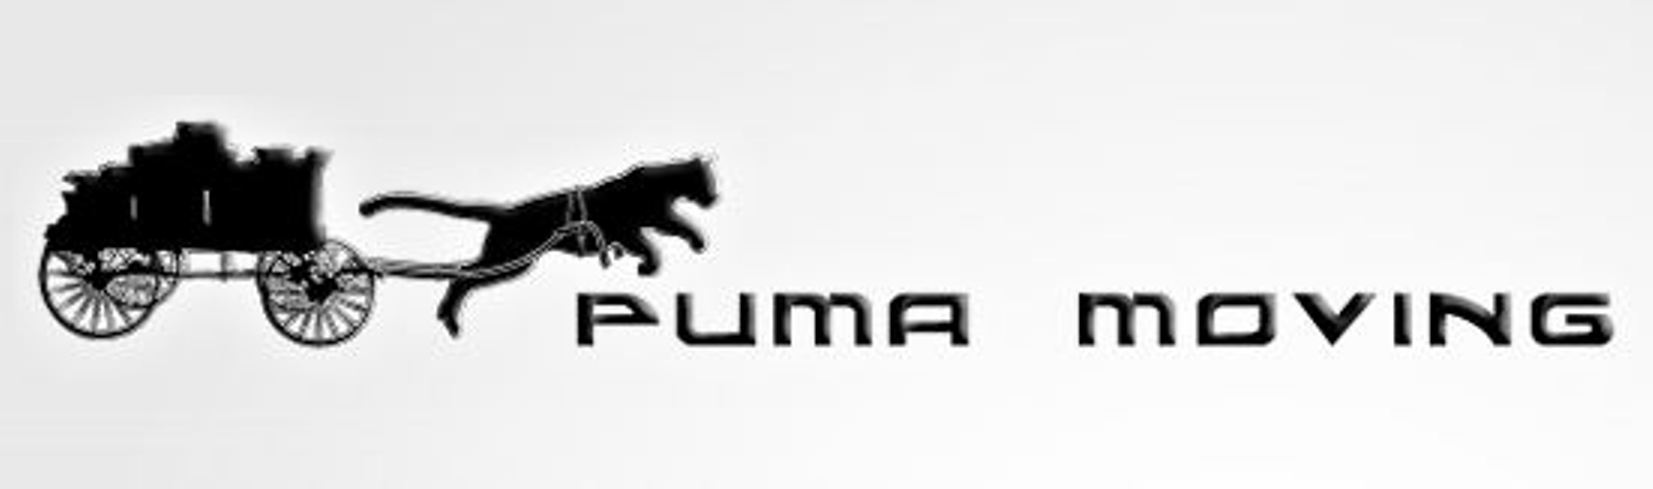 puma resource temporarily unavailable